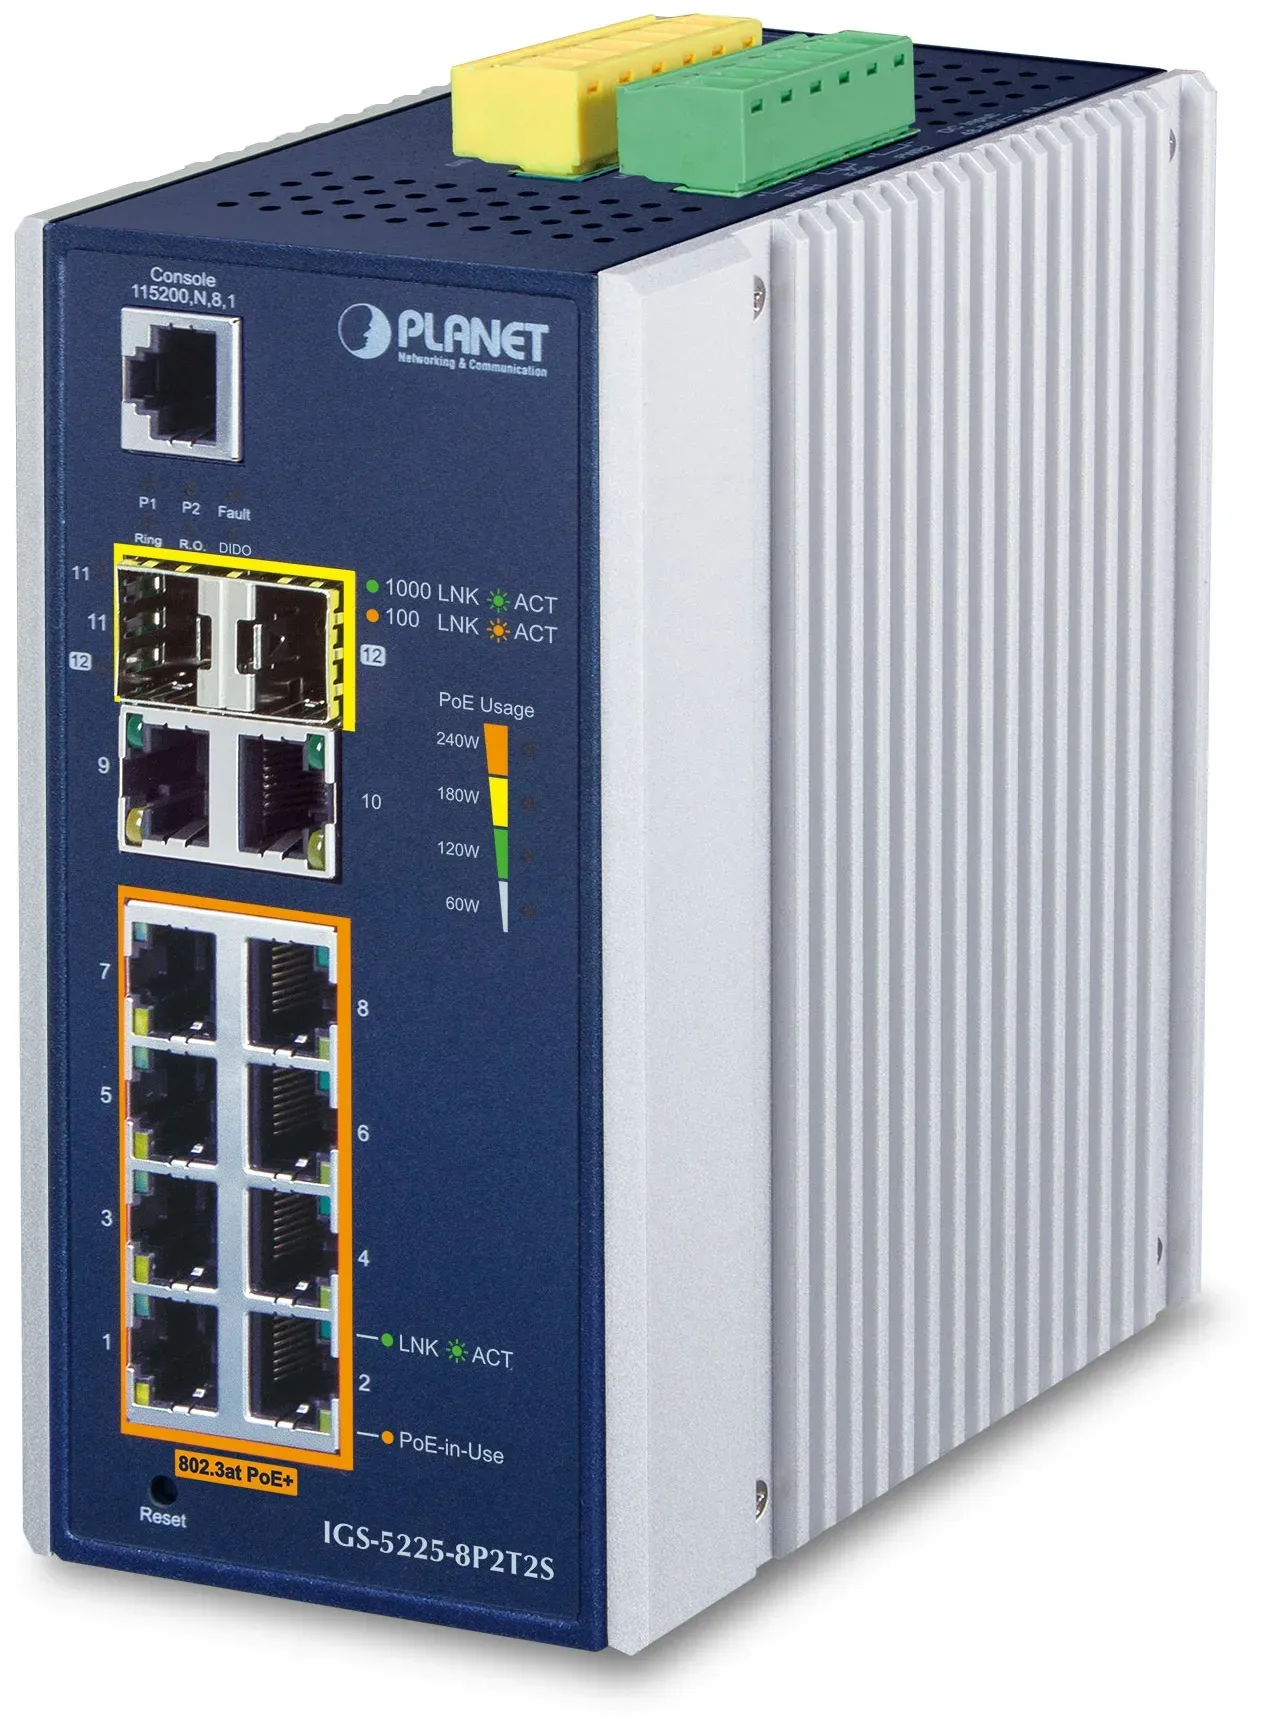 PLANET IGS-5225-8P2T2S Netzwerk-Switch Managed L2+ Gigabit Ethernet (10/100/1000) Power over Ethernet (PoE) Blau, Weiß